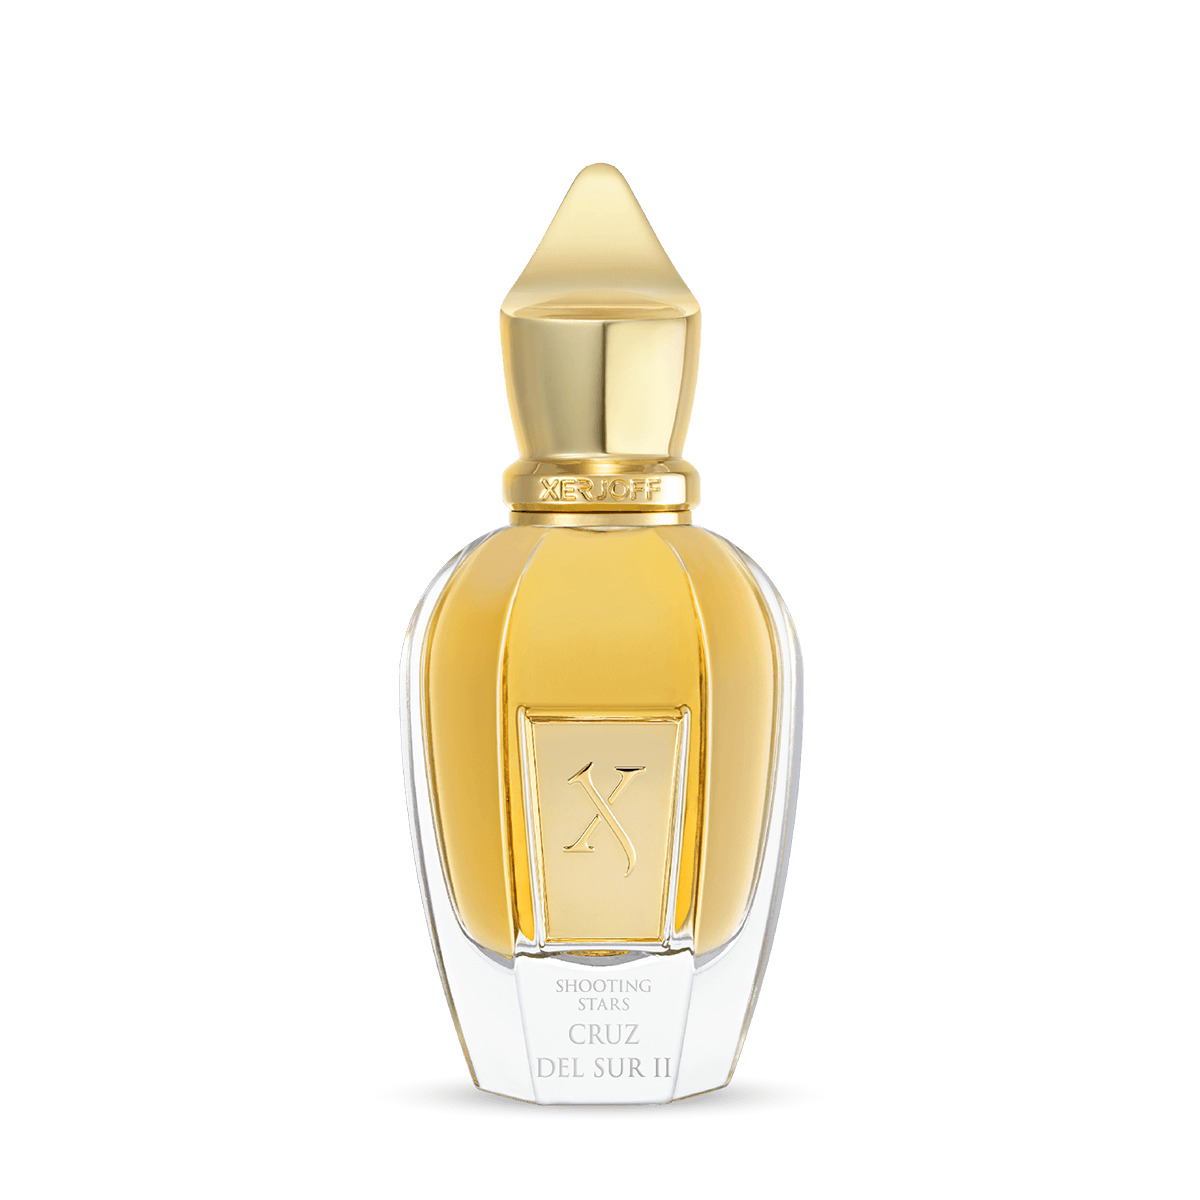 Cruz Del Sur II Parfum (Shooting Stars Collection)